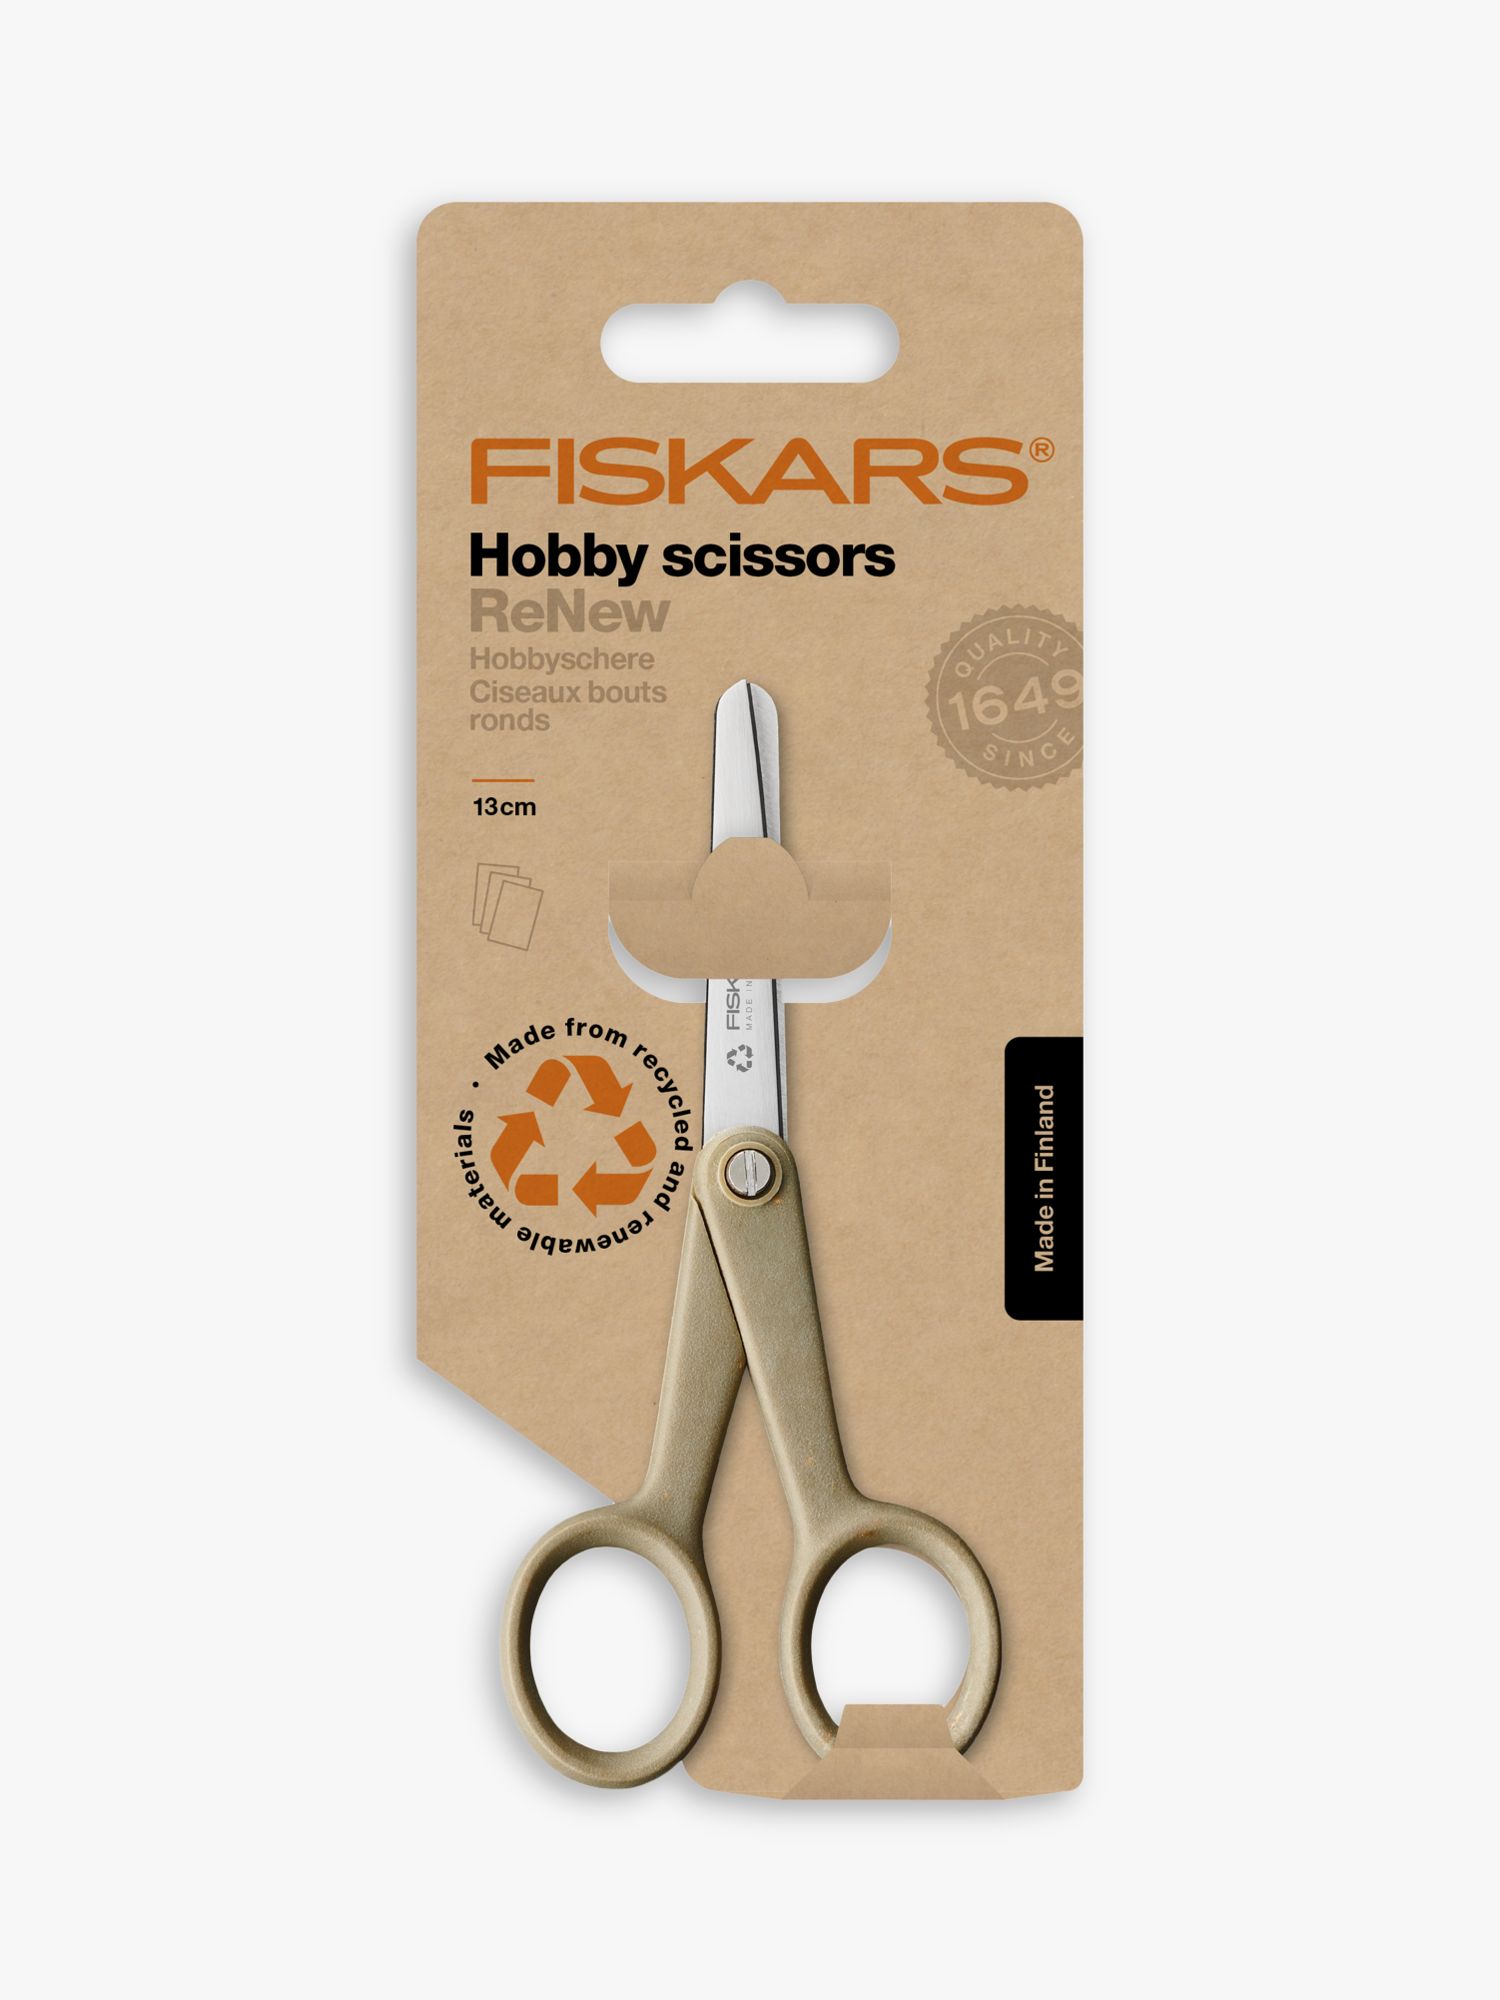 Fiskars RazorEdge Micro-Tip Easy Action Scissors - 6 - Stainless Steel Fabric  Scissors - Arts and Crafts - Orange - Yahoo Shopping